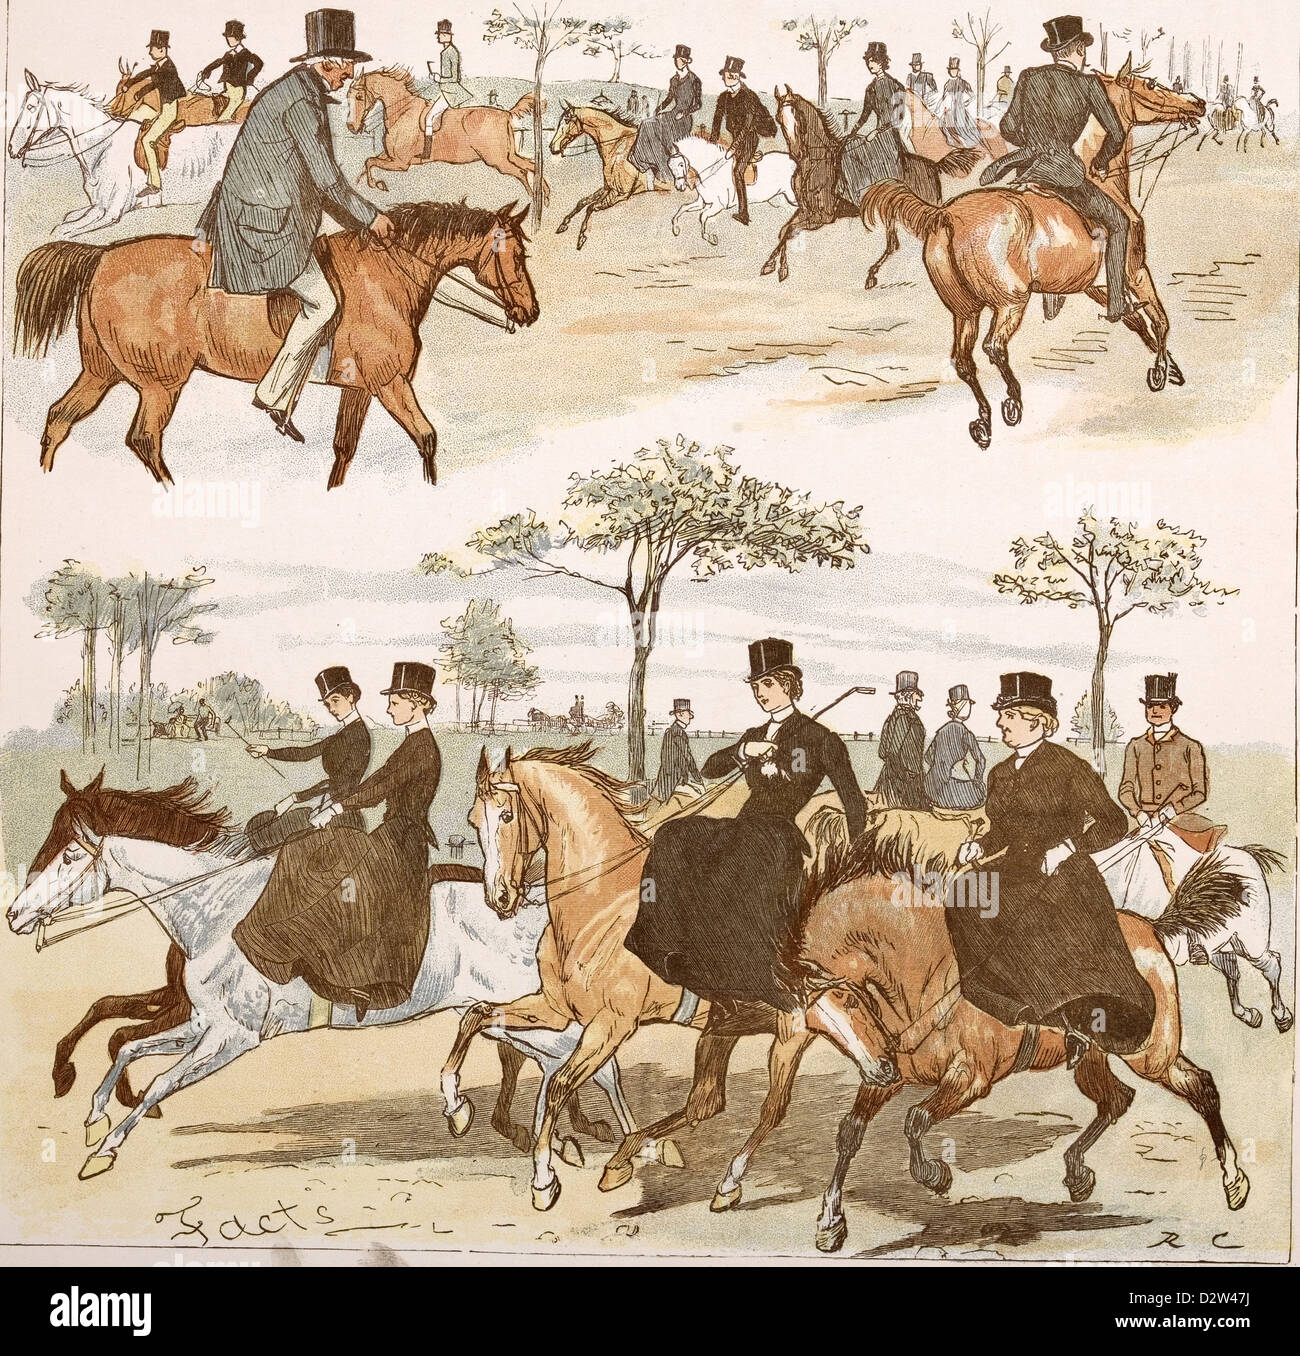 HORSERIDING 19th century, engraved image Stock Photo